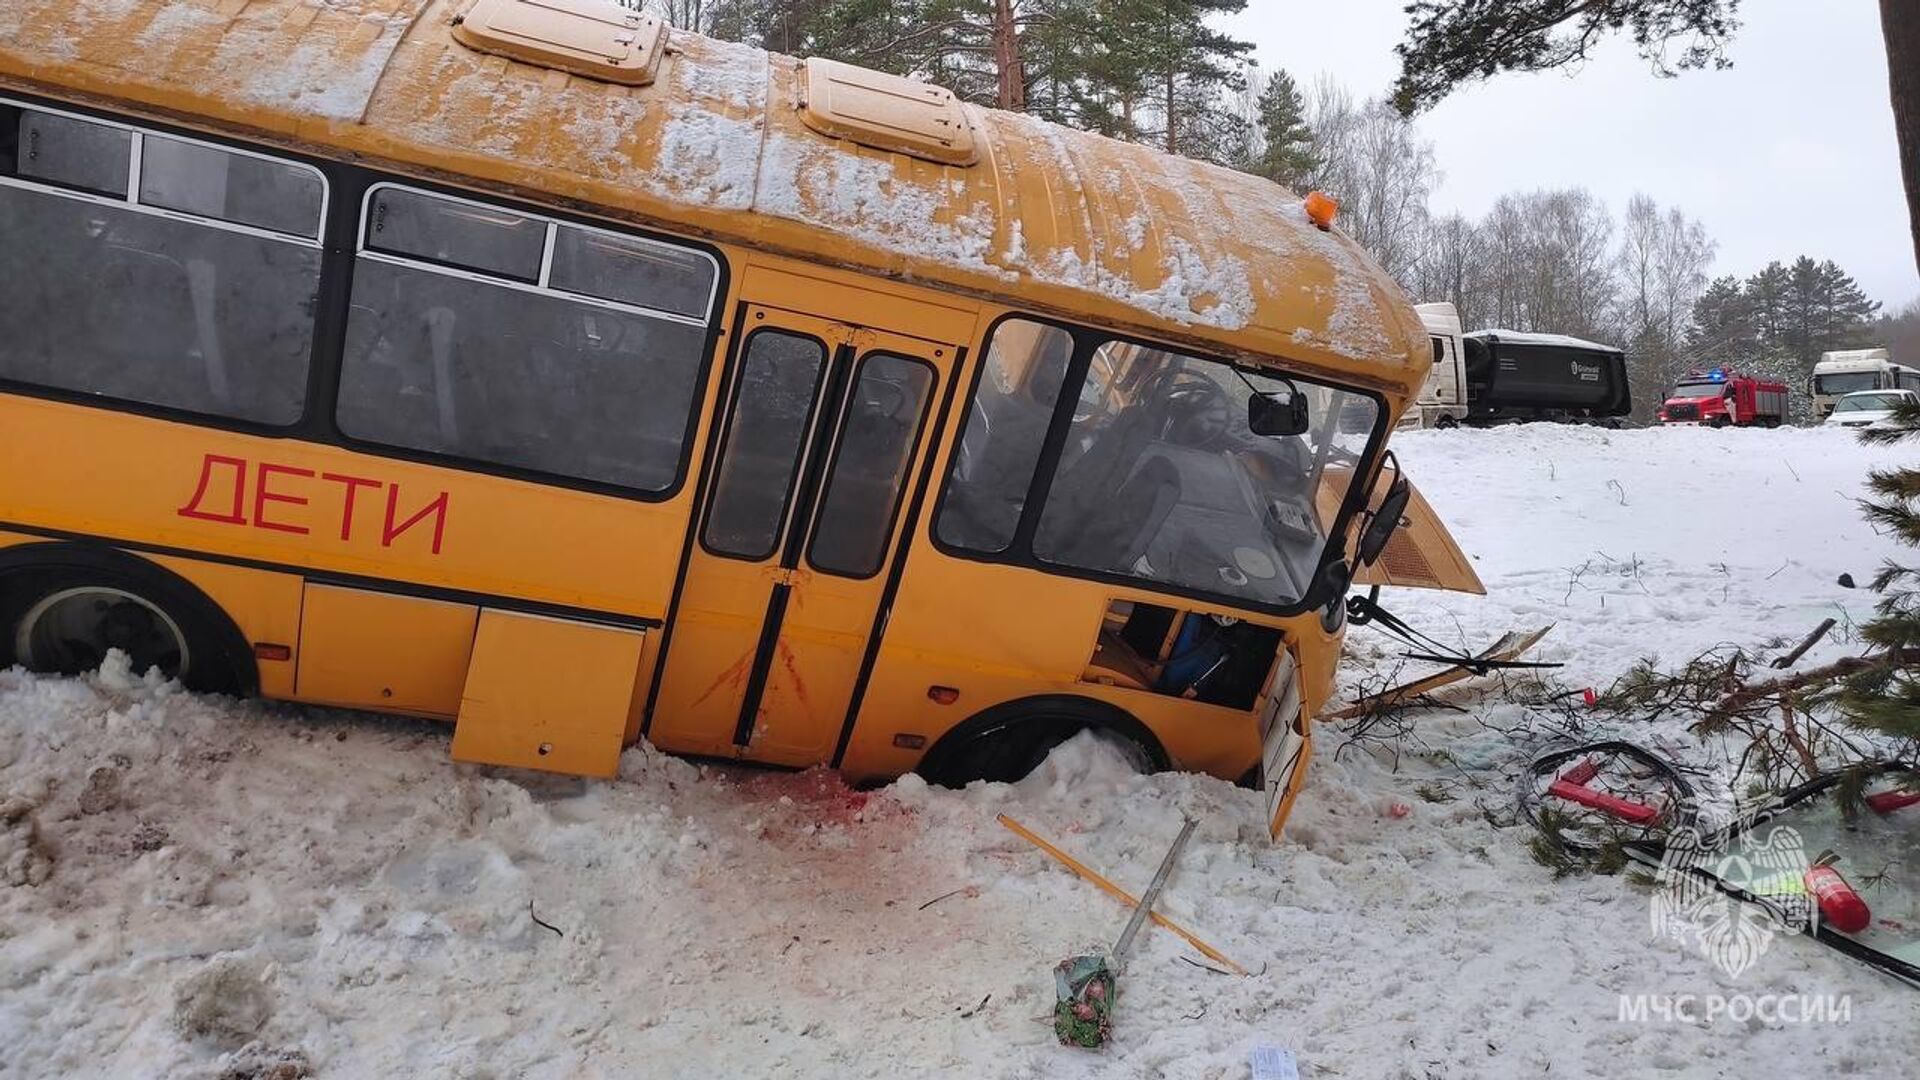 В Севастополе троллейбус столкнулся со скорой , четверо пострадали